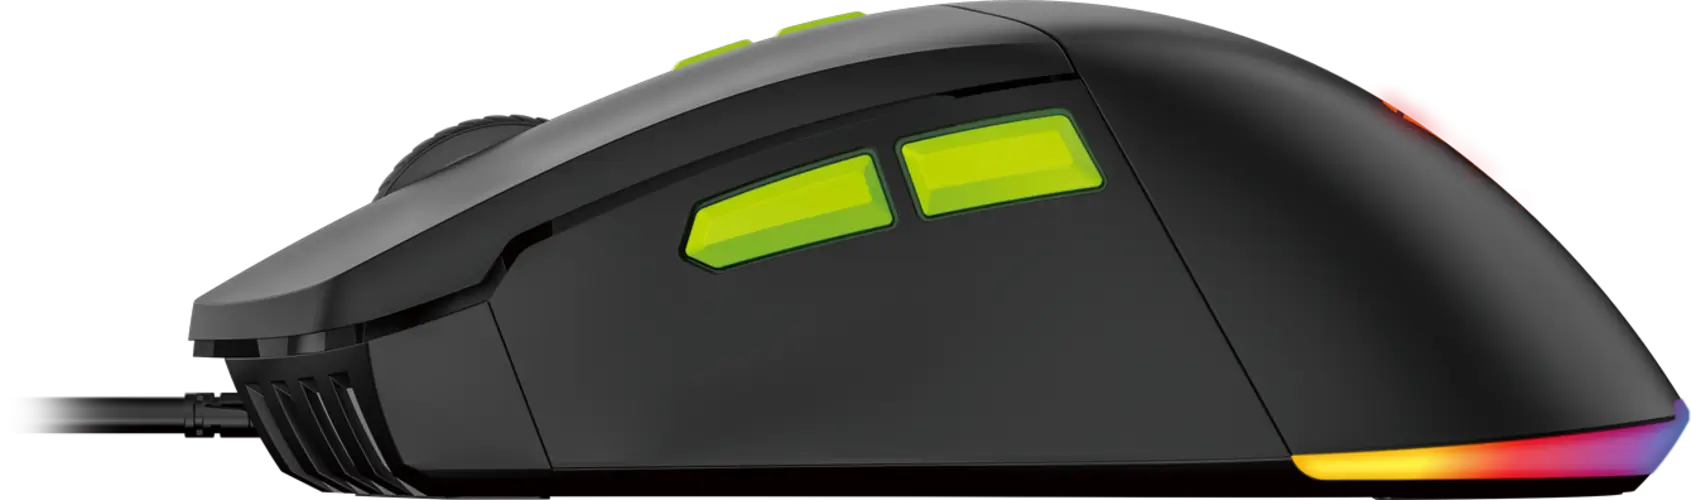 Fantech PHANTOM II VX6 RGB Wired Macro Gaming Mouse - Black